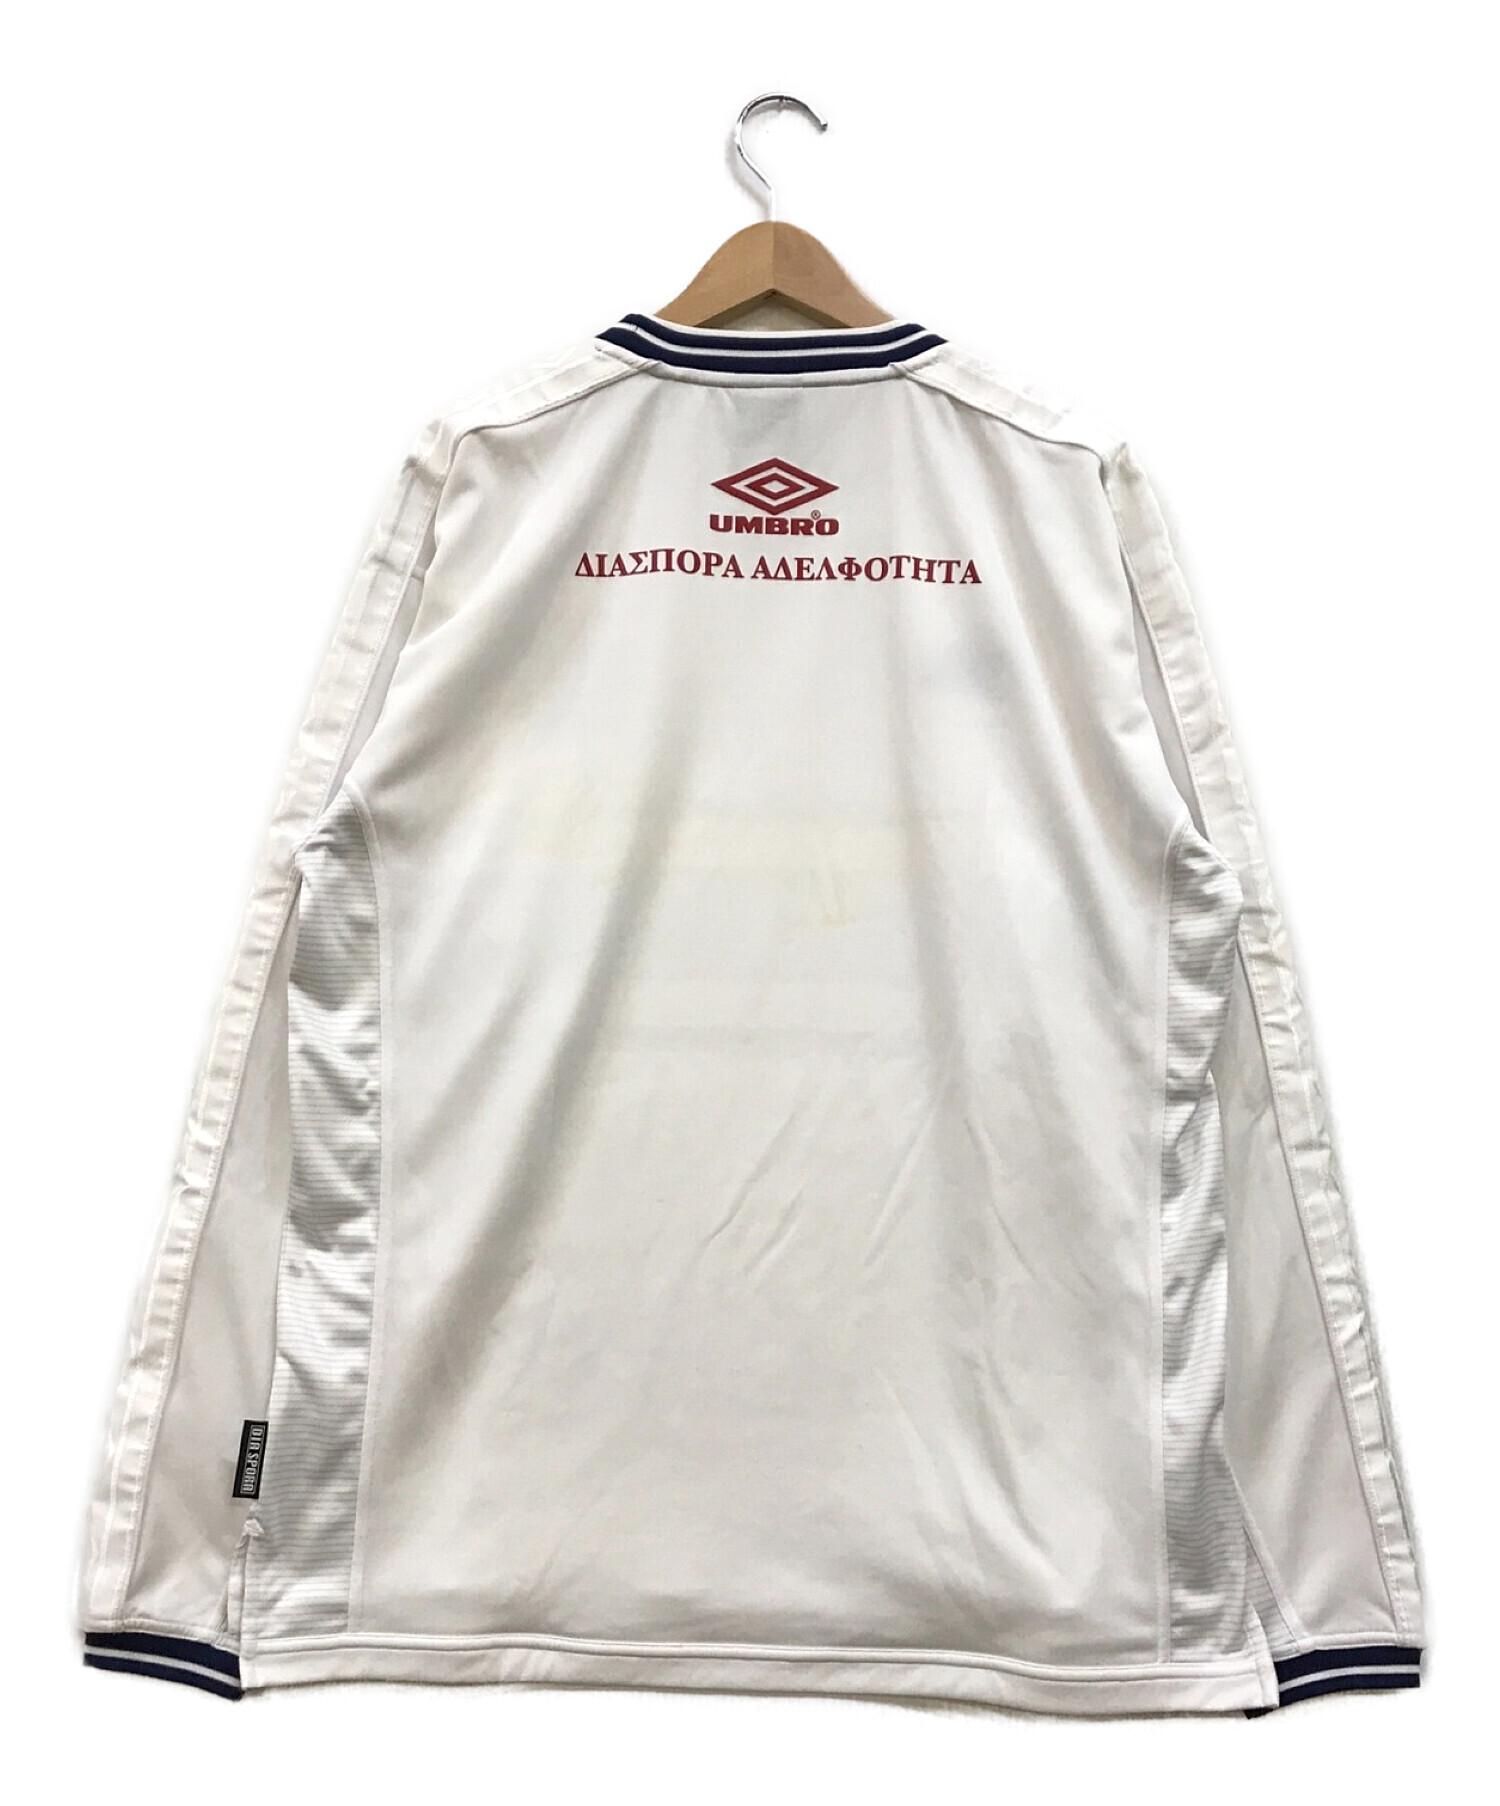 UMBRO (アンブロ) Diaspora Skateboards (ディアスポラスケートボードズ) Football Shirts ホワイト  サイズ:O